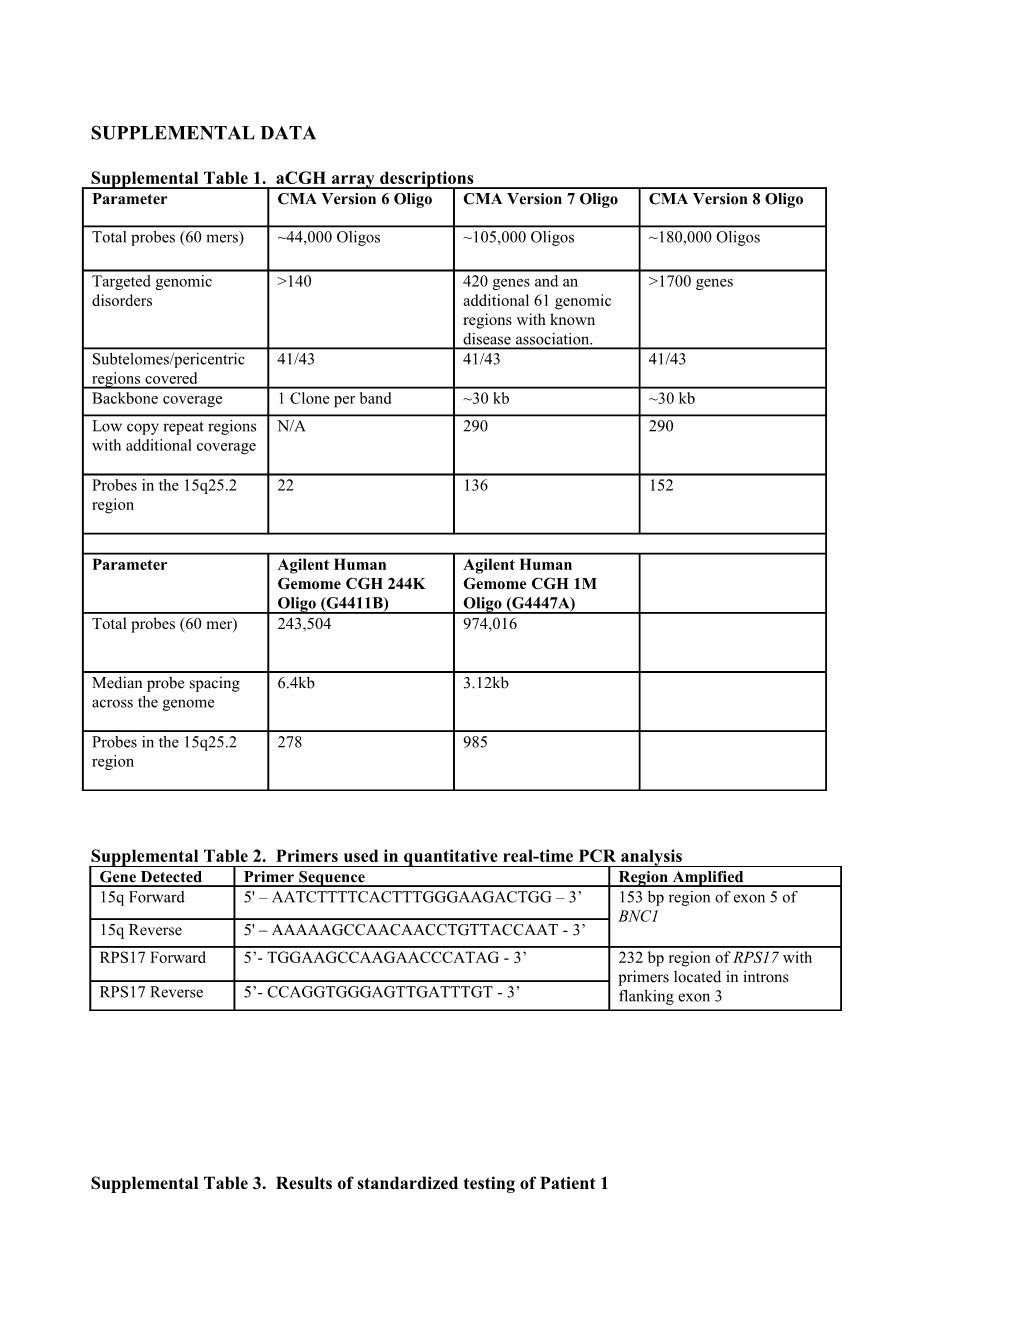 Supplemental Table 1. Acgh Array Descriptions